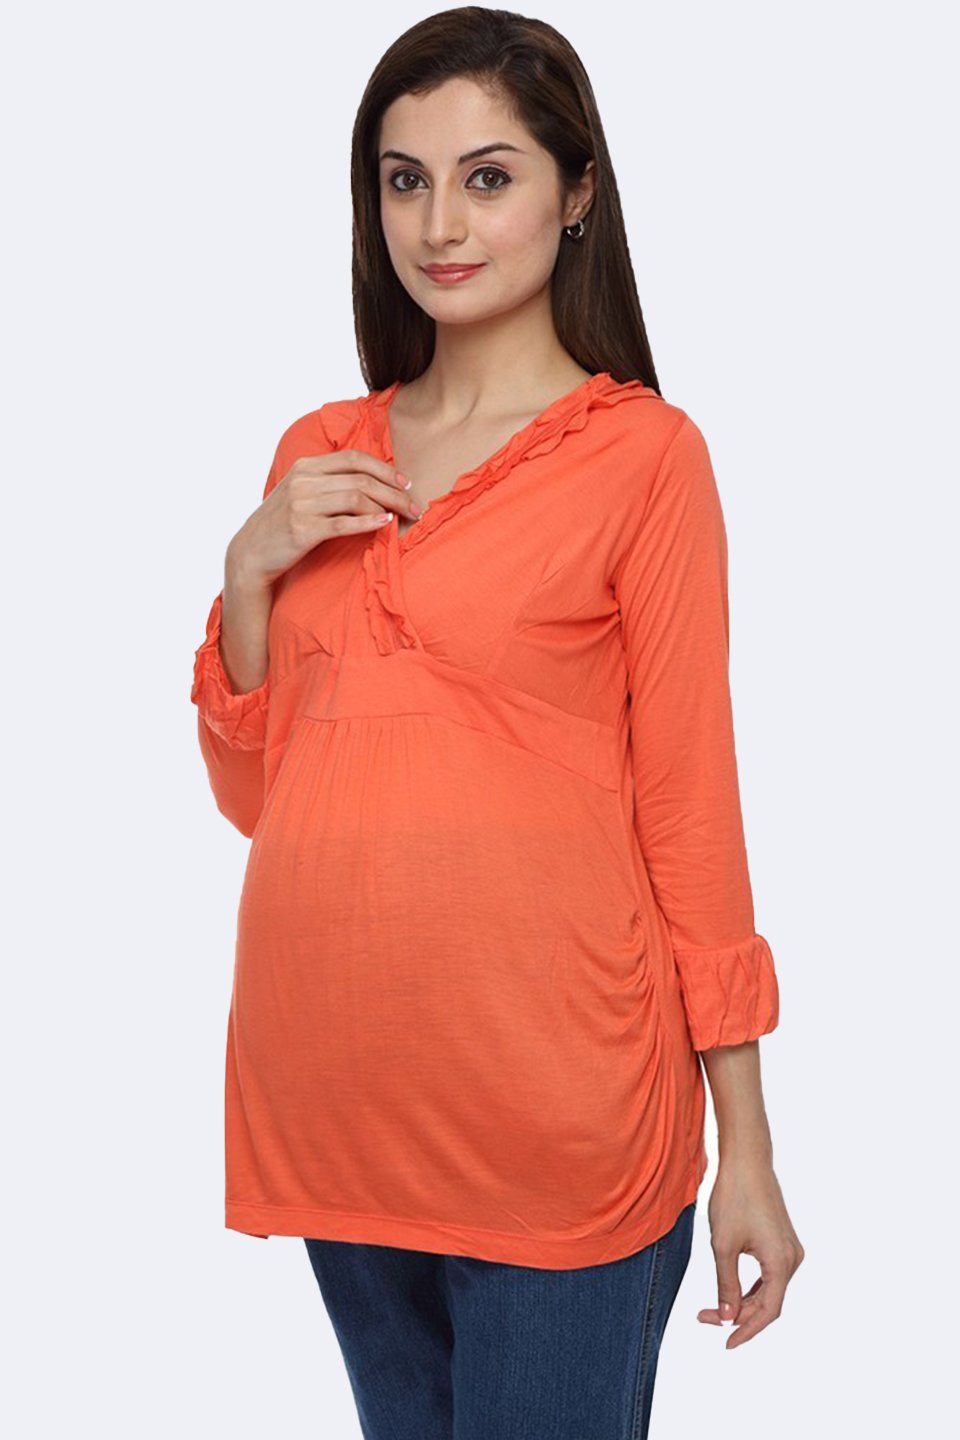 Classy Orange Evening Maternity Top